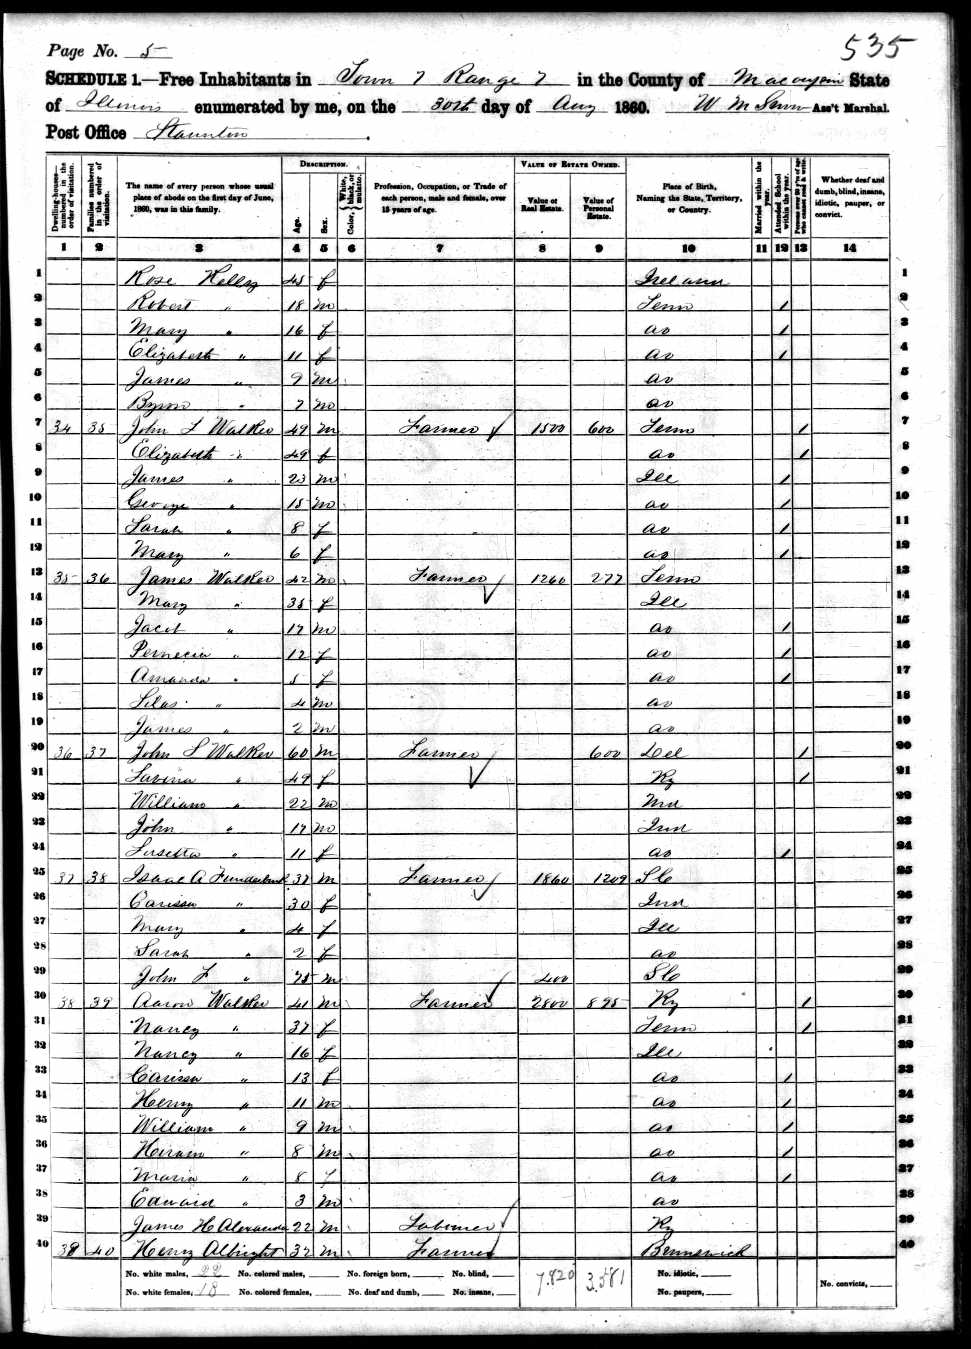 John L. Walker, 1860 Macoupin County, Illinois, census